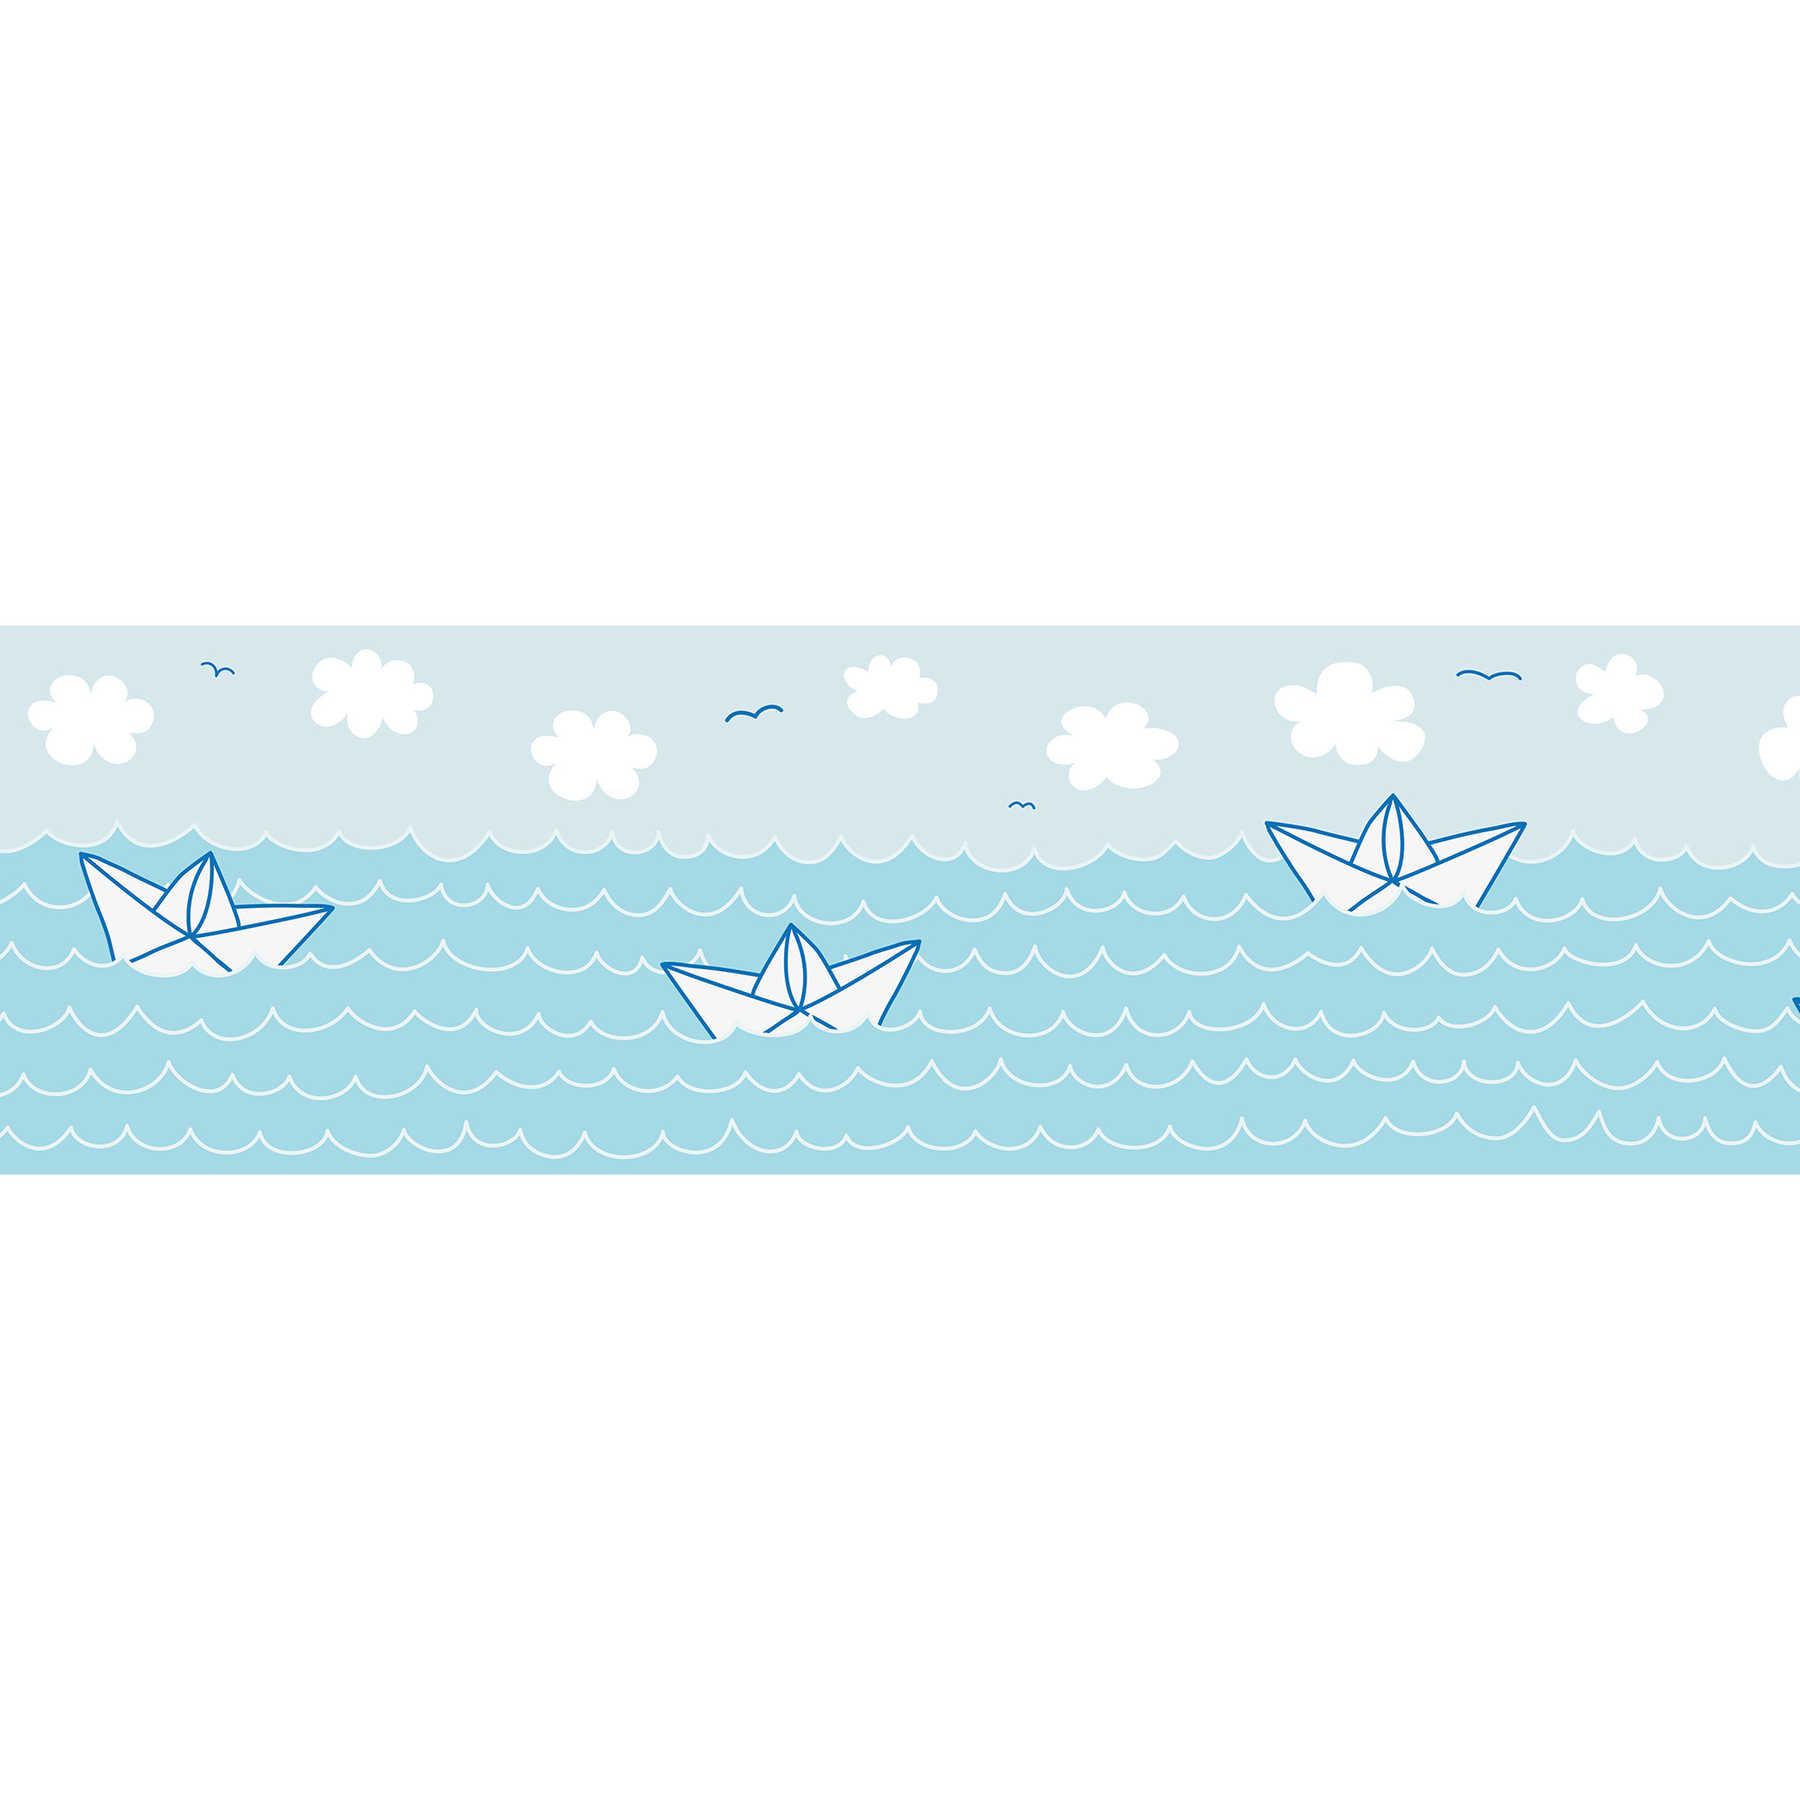 Nursery Self-adhesive border "Funny boat ride" - Blue, White
